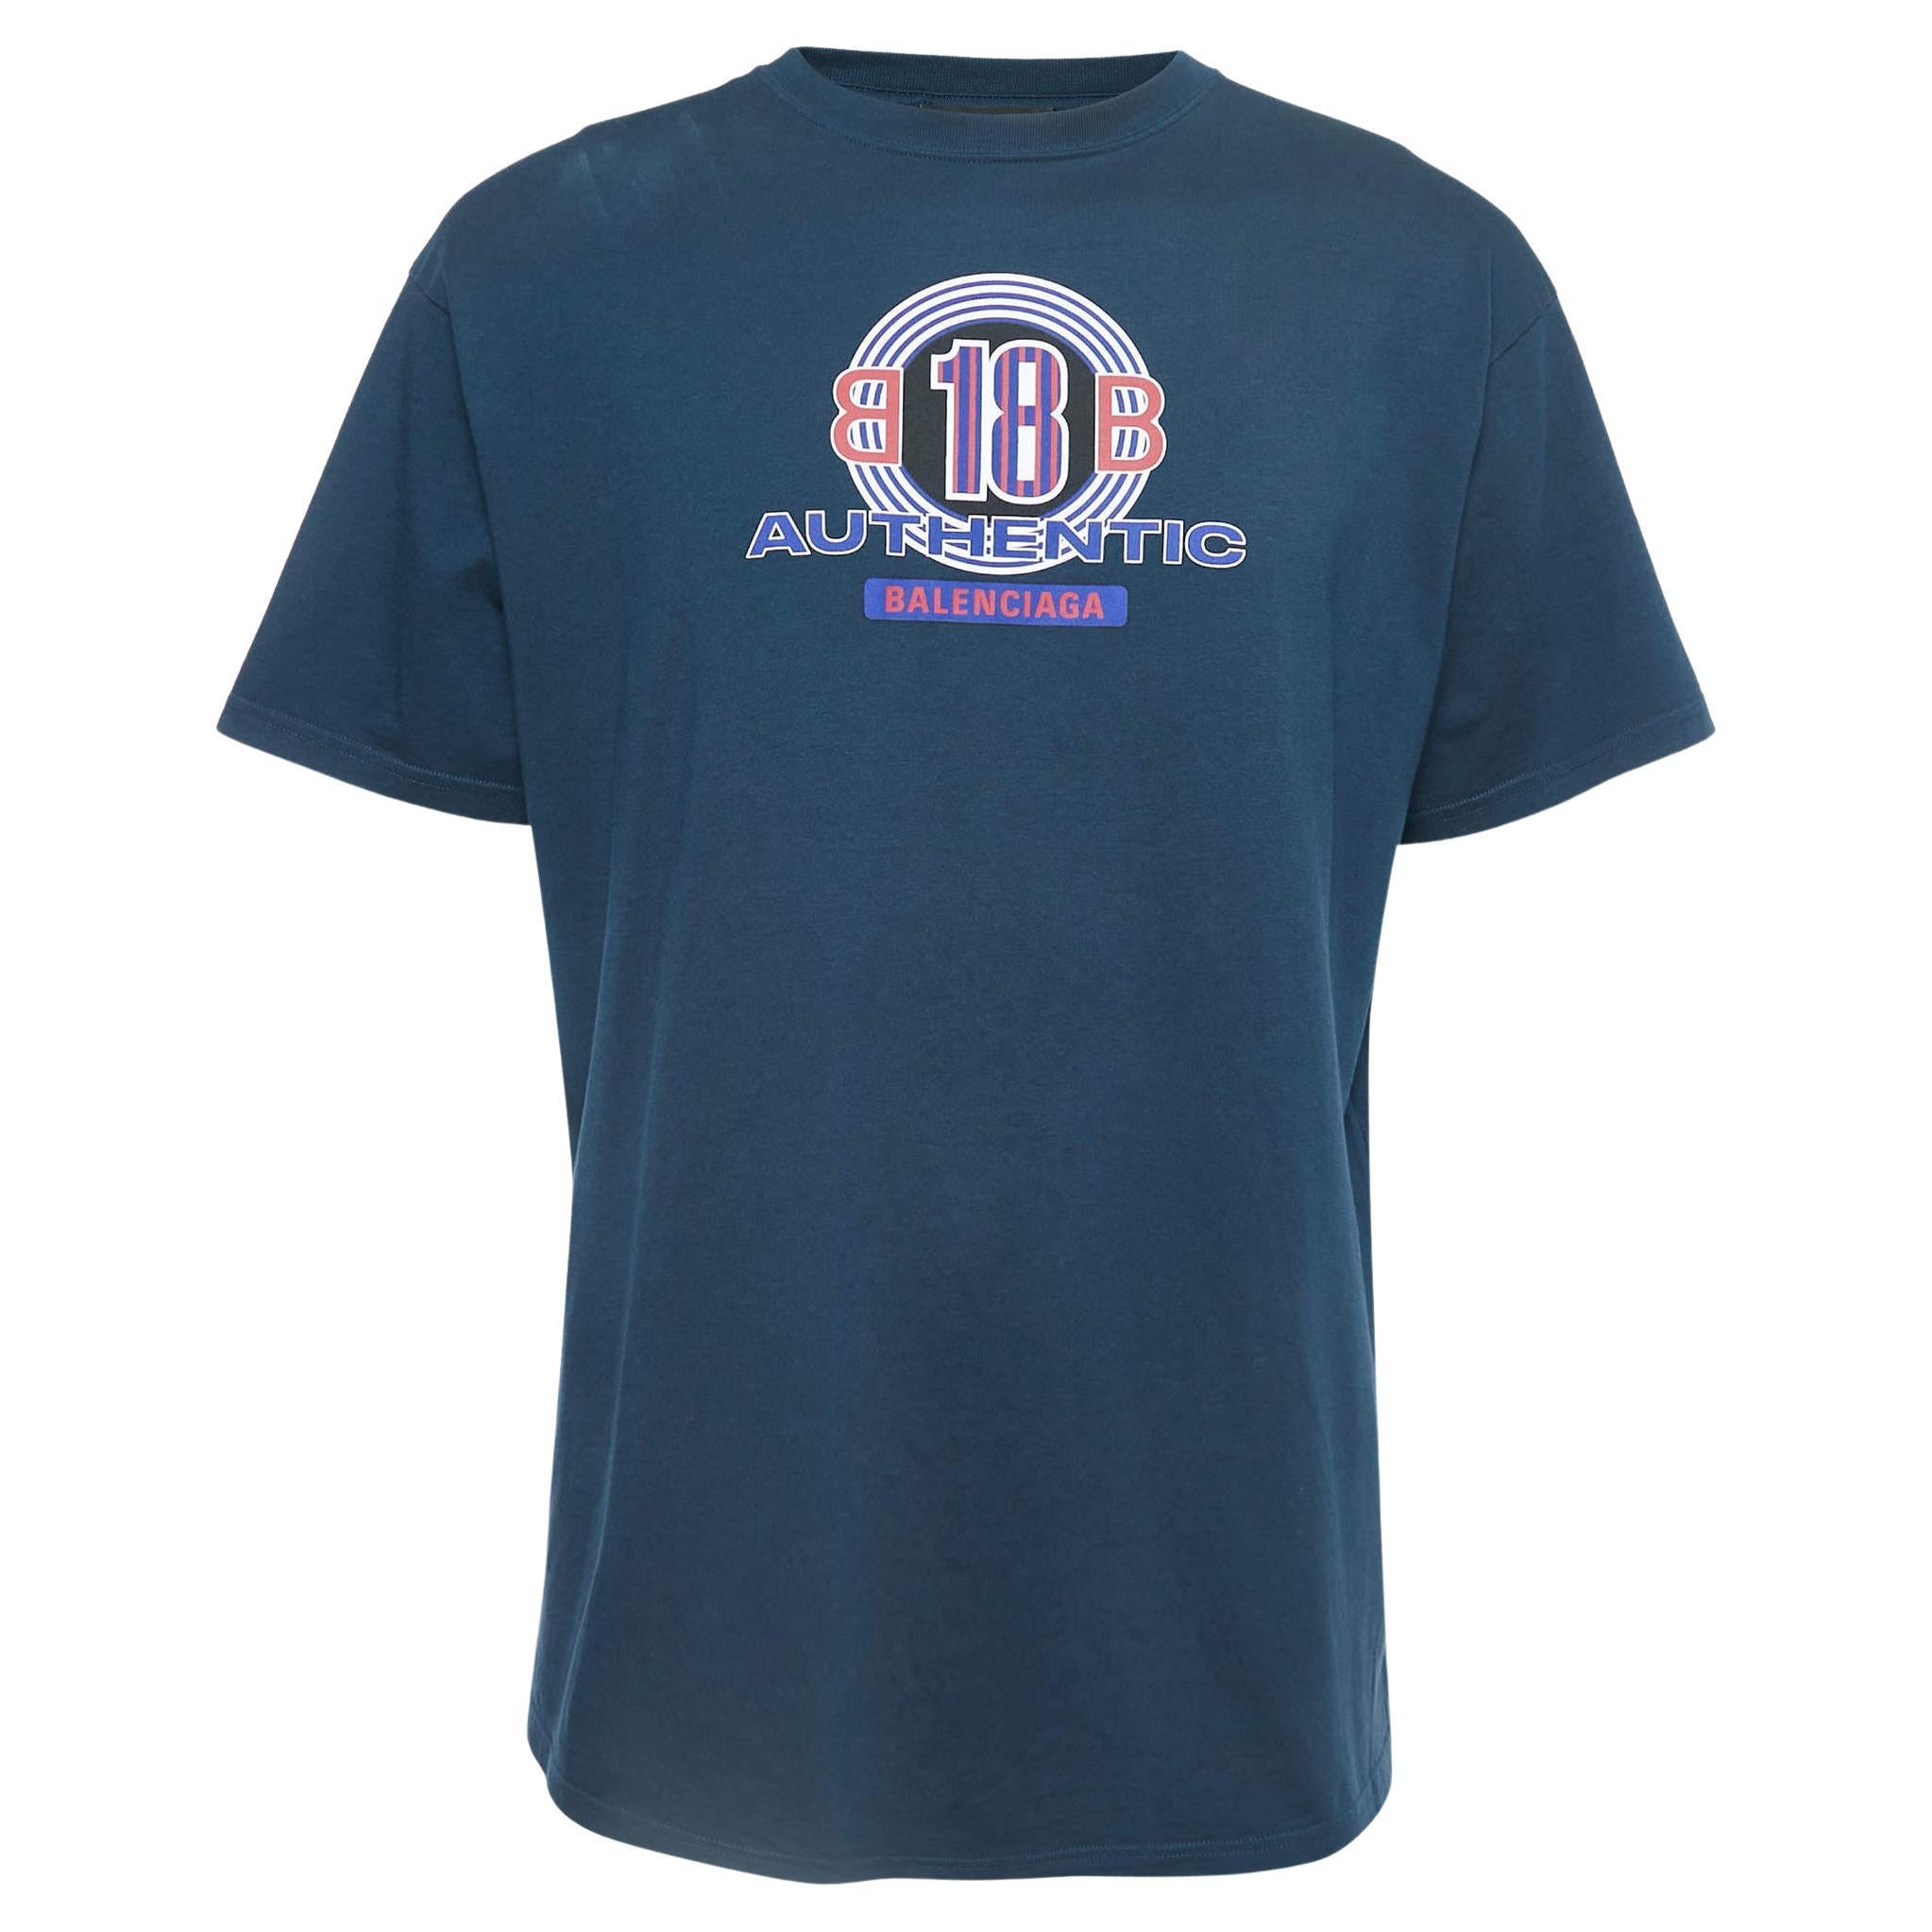 Balenciaga Navy Blue Printed Cotton T-Shirt S For Sale